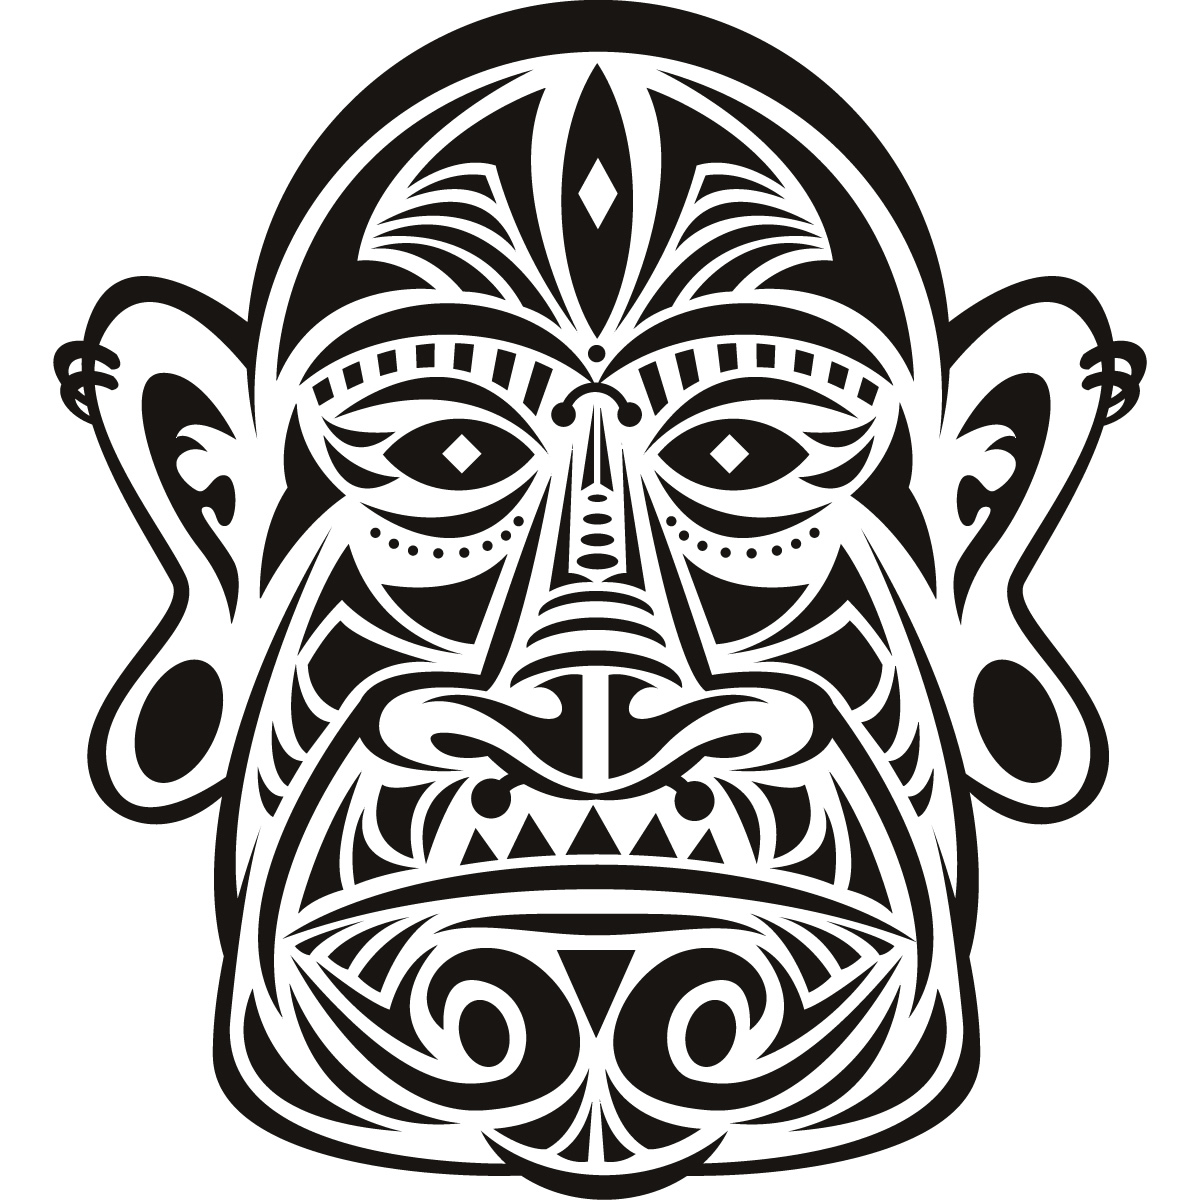 Maori Face Around the World Wall Art Sticker Wall Art Transfers | eBay